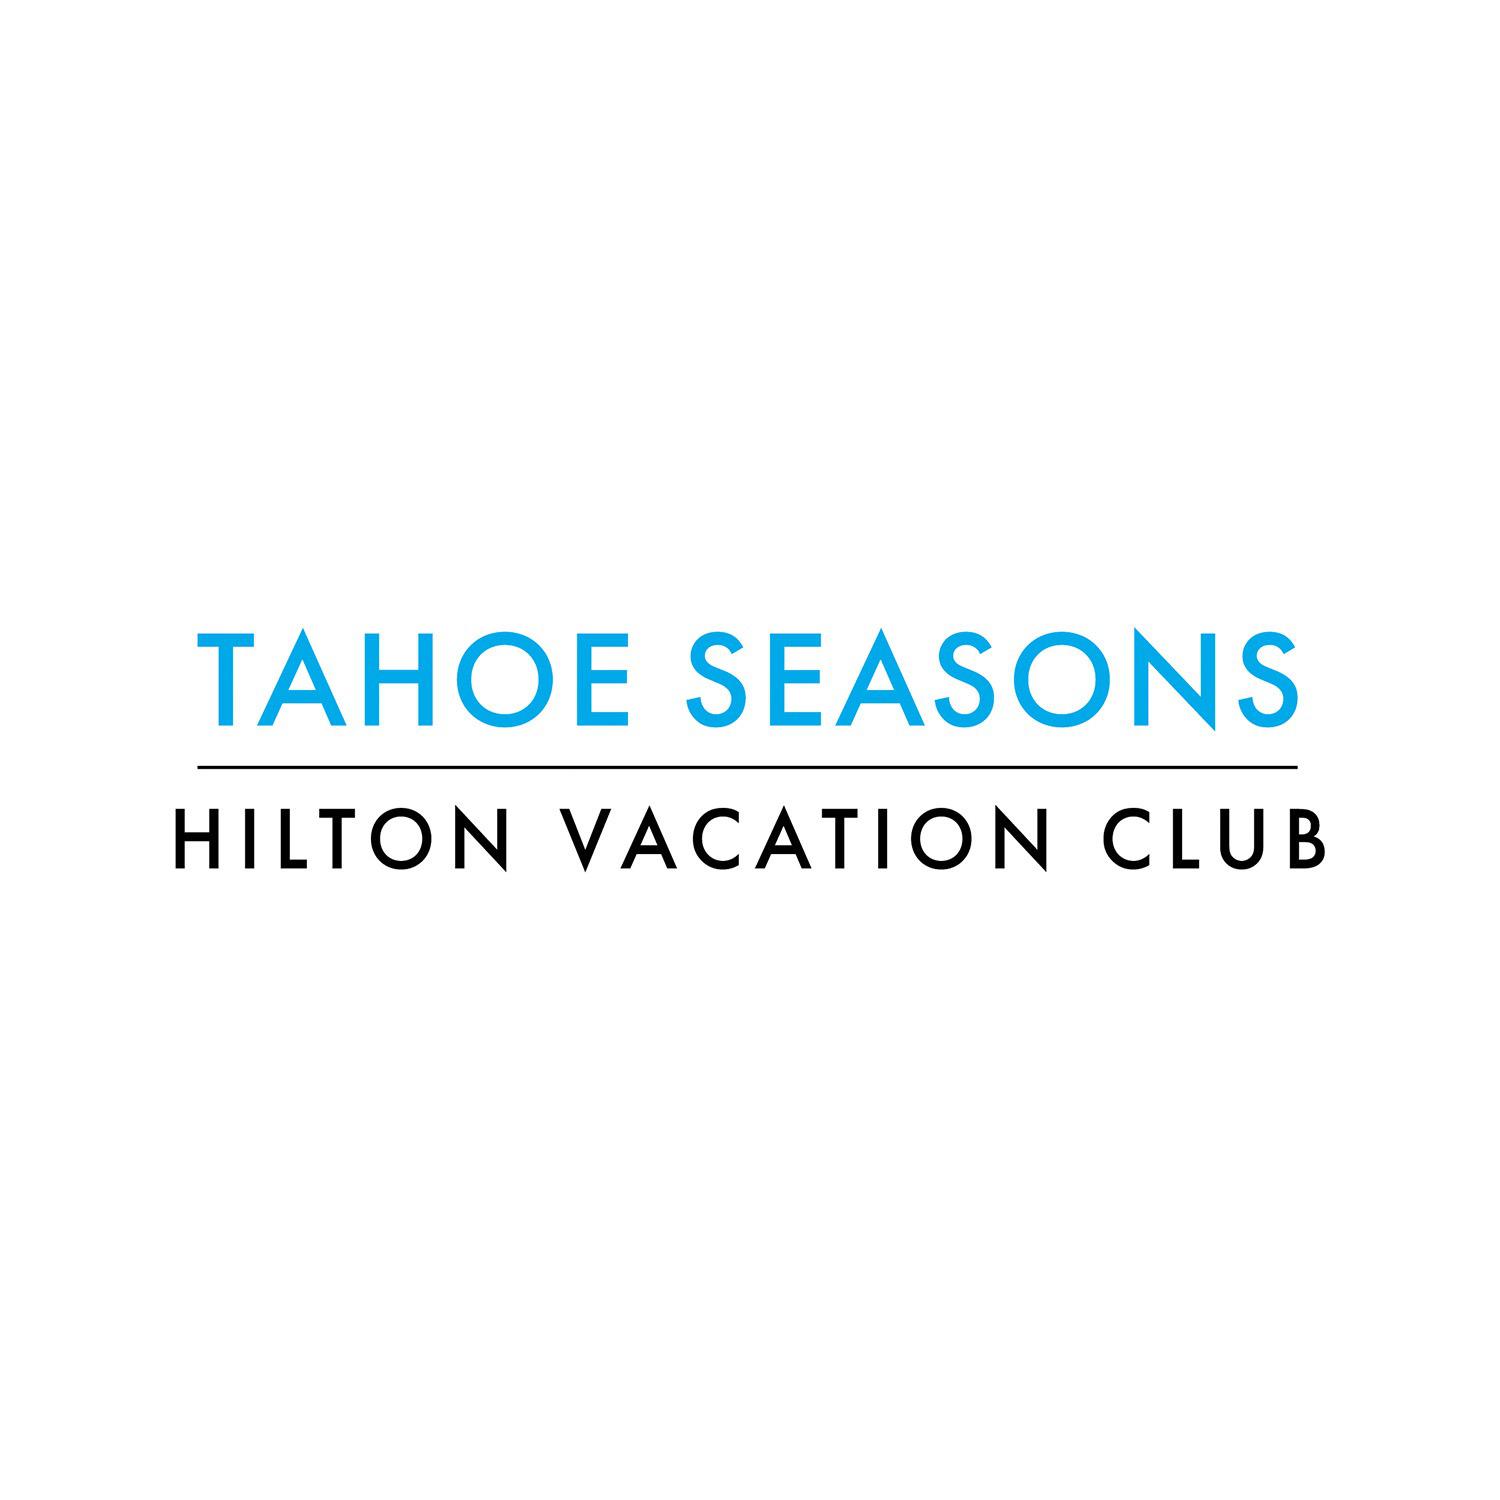 Hilton Vacation Club Tahoe Seasons Lake Tahoe - South Lake Tahoe, CA 96150 - (530)541-6700 | ShowMeLocal.com